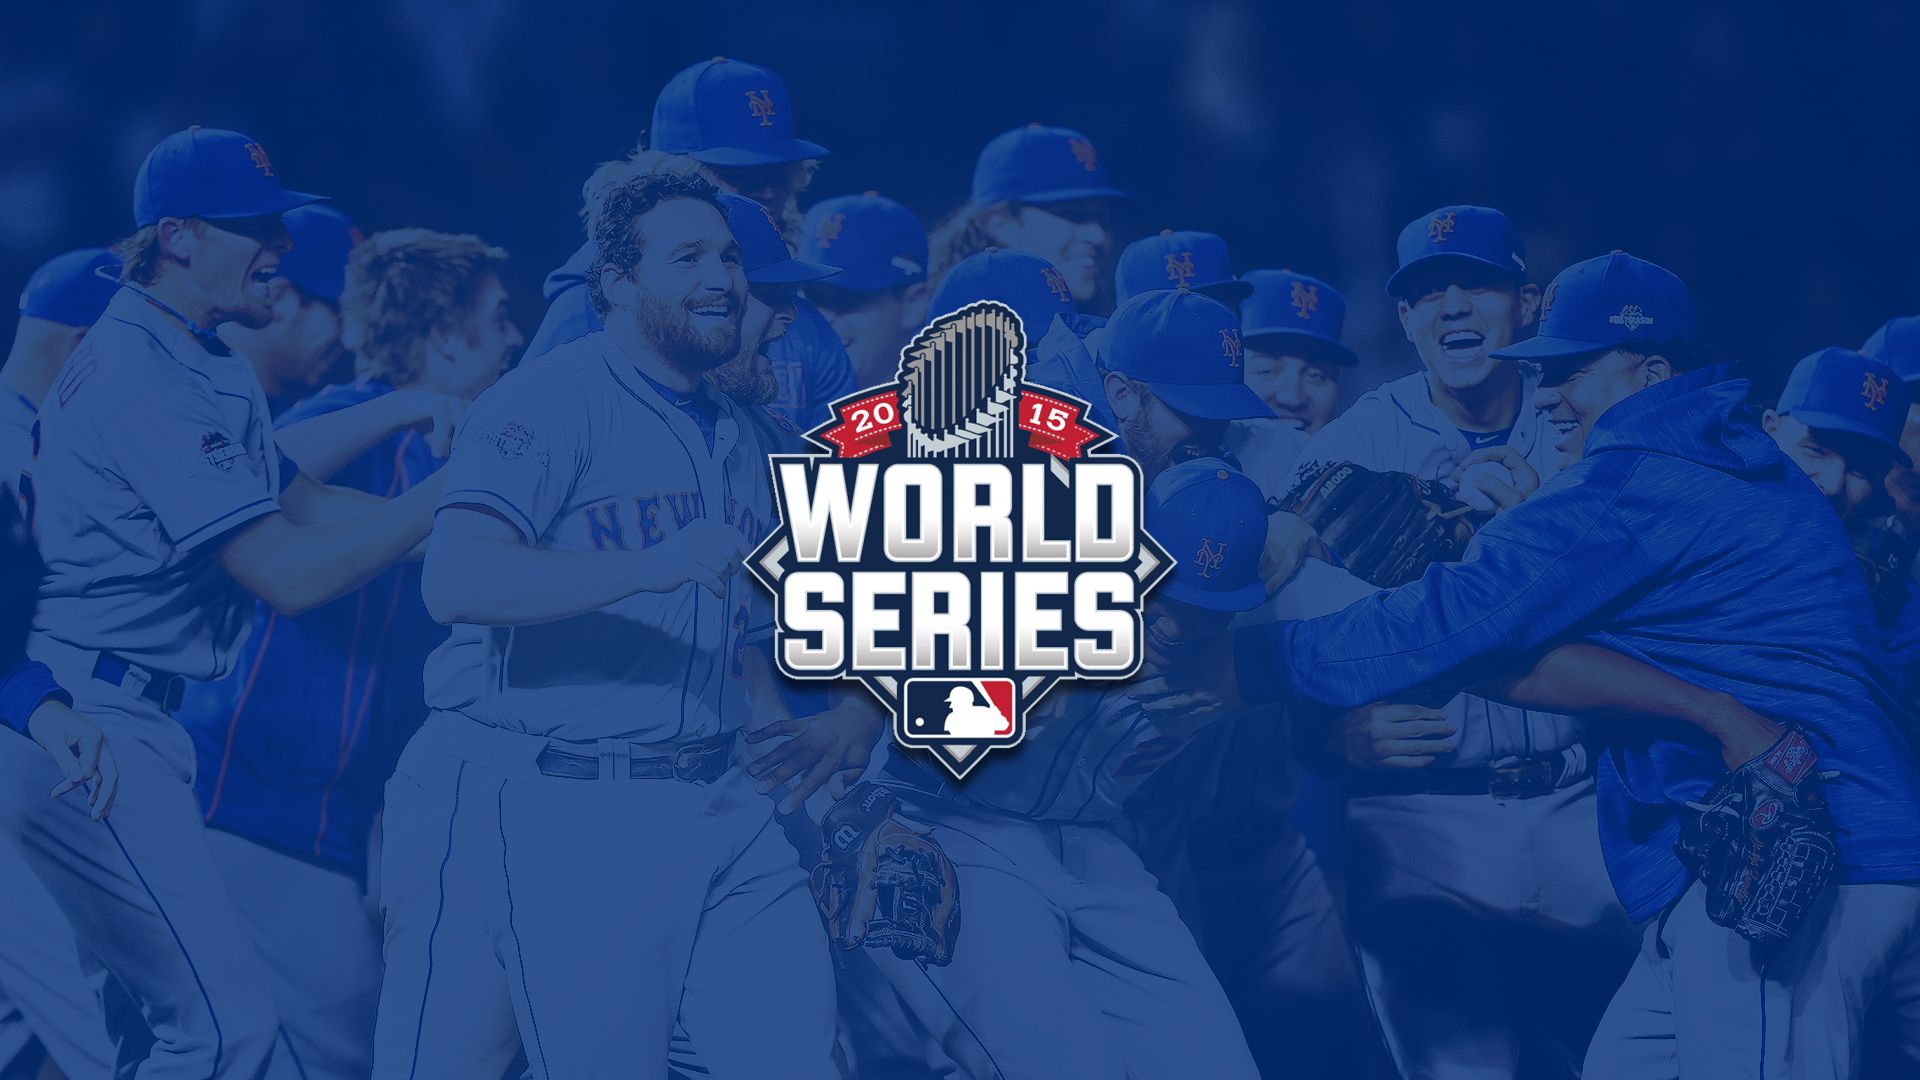 New York Mets - 2015 World Series Wallpaper : NewYorkMets